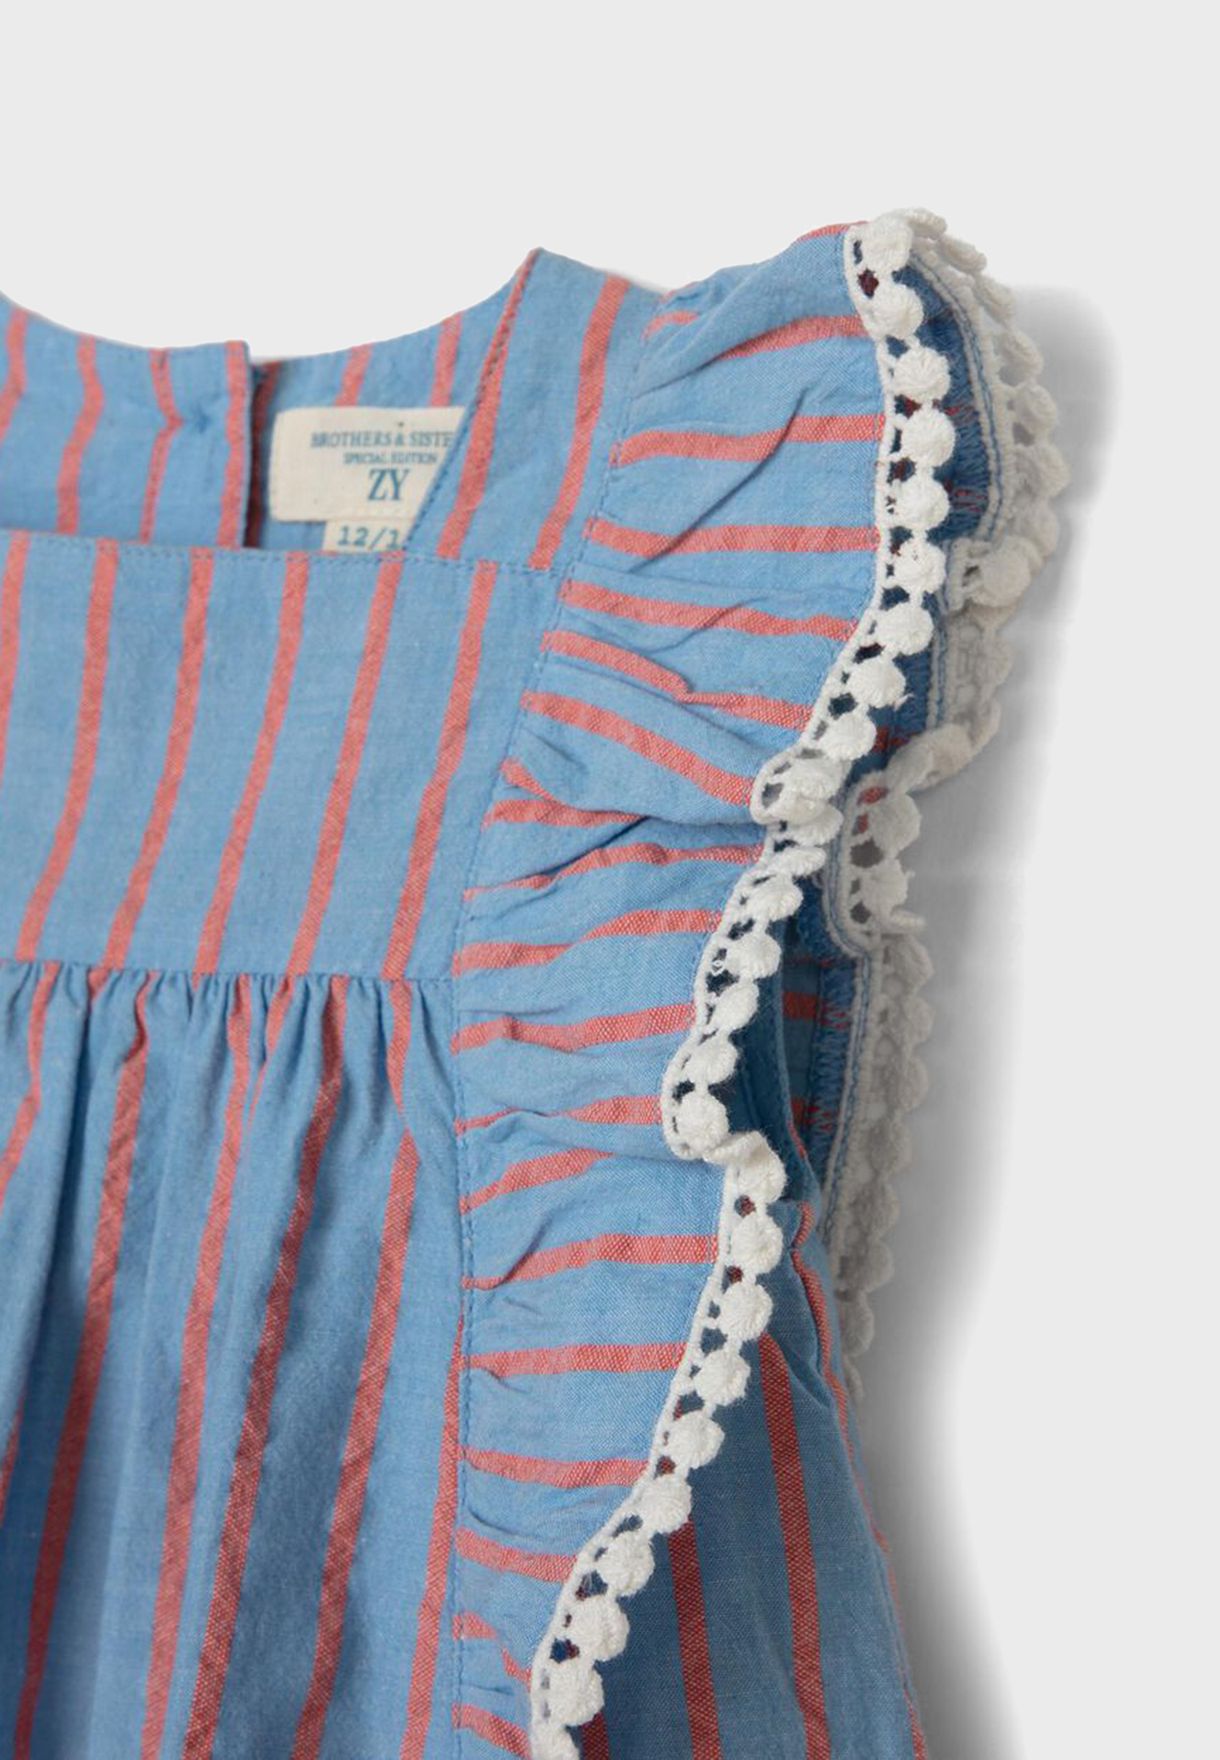 Infant Striped Ruffle Dress + Shorts Set